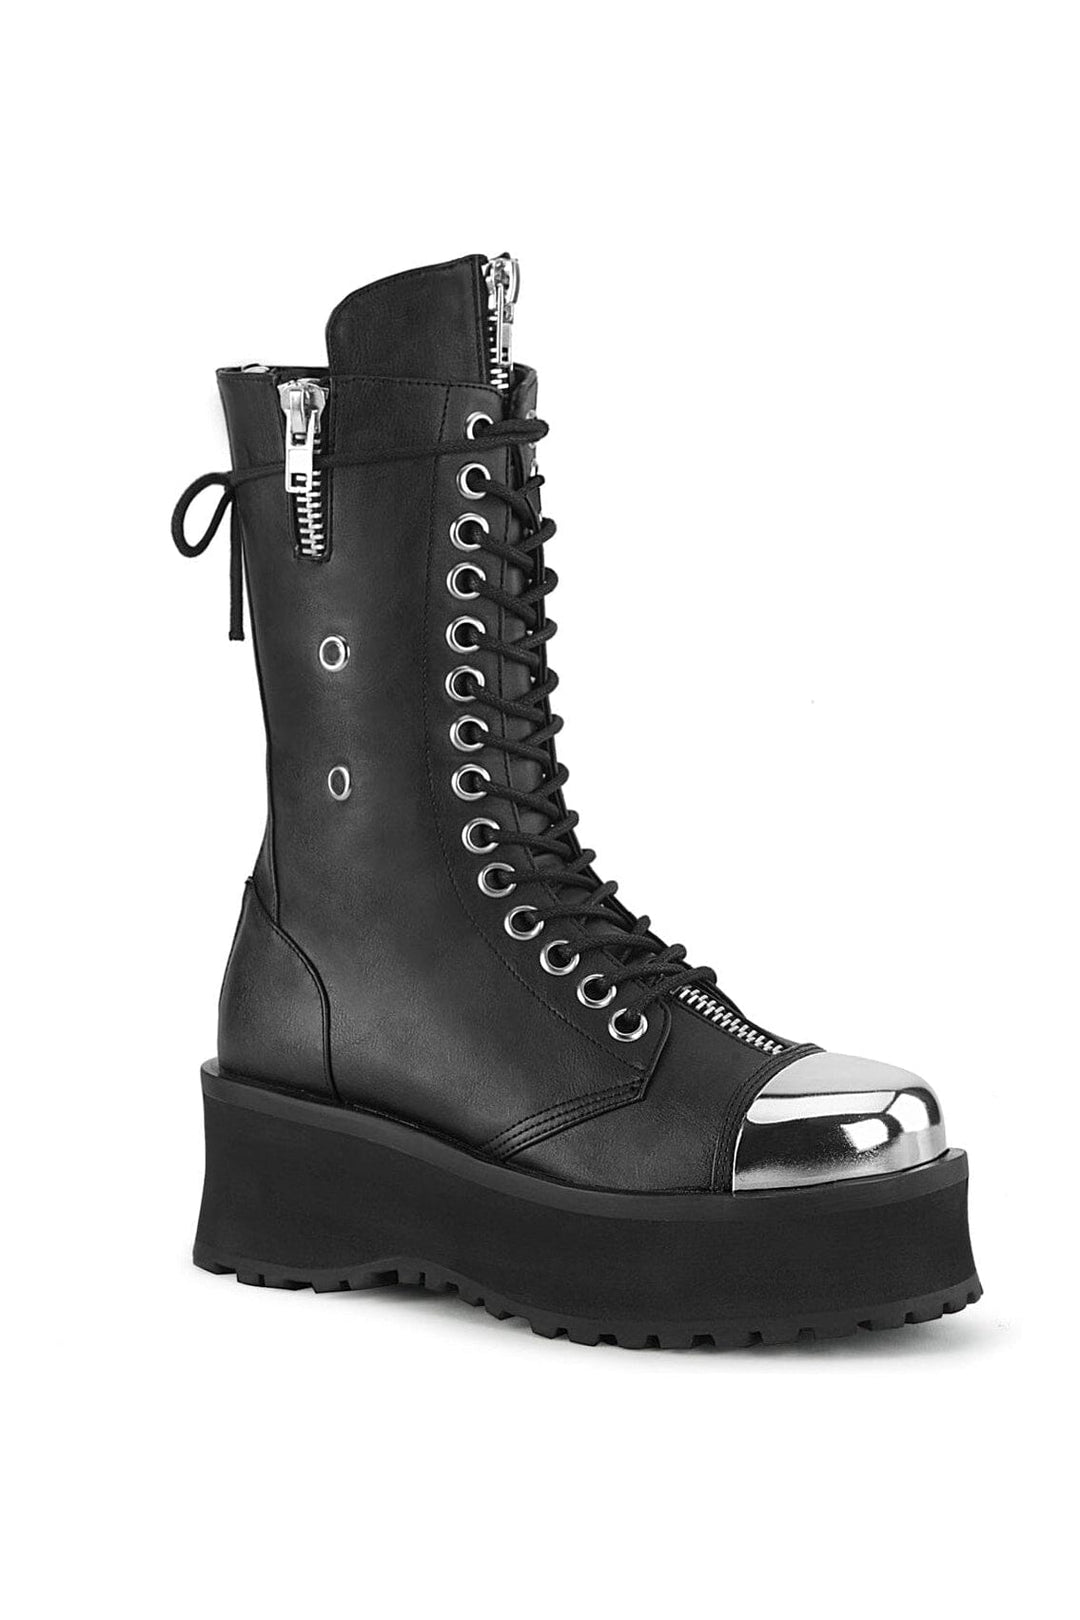 GRAVEDIGGER-14 Black Vegan Leather Knee Boot-Knee Boots-Demonia-Black-10-Vegan Leather-SEXYSHOES.COM